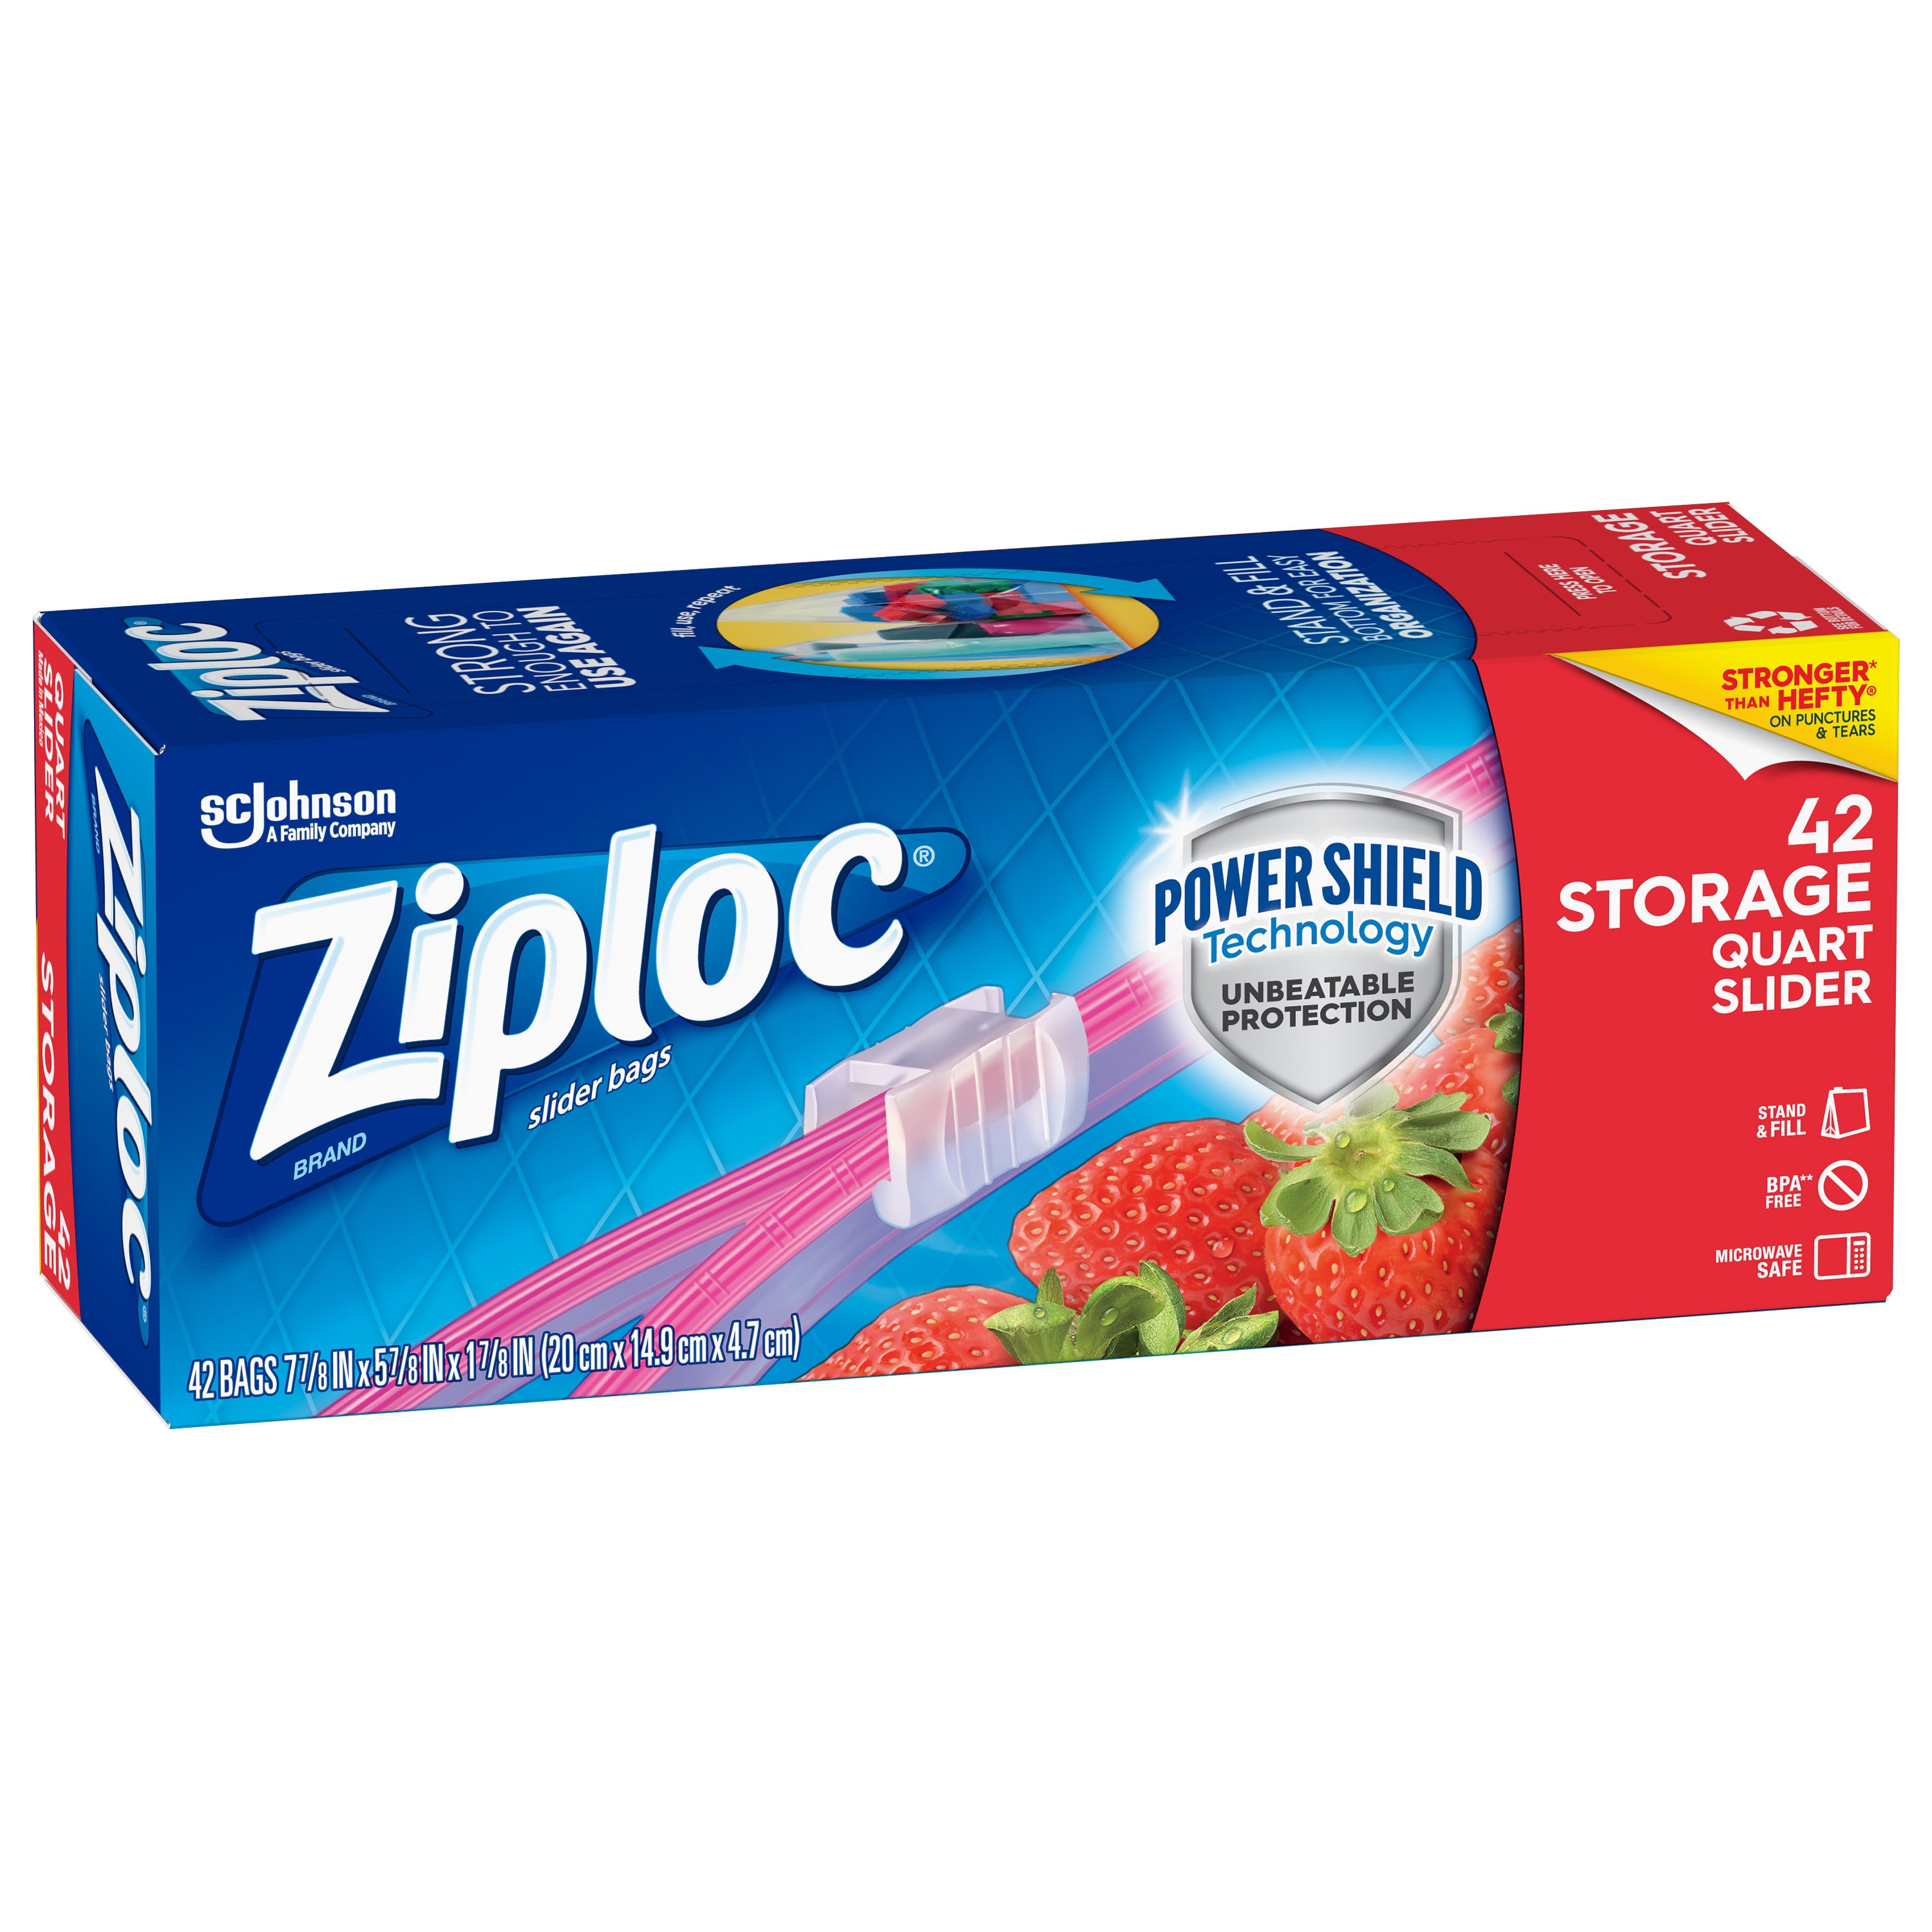 Ziploc Quart Food Storage Slider Bags - 42ct/9pk